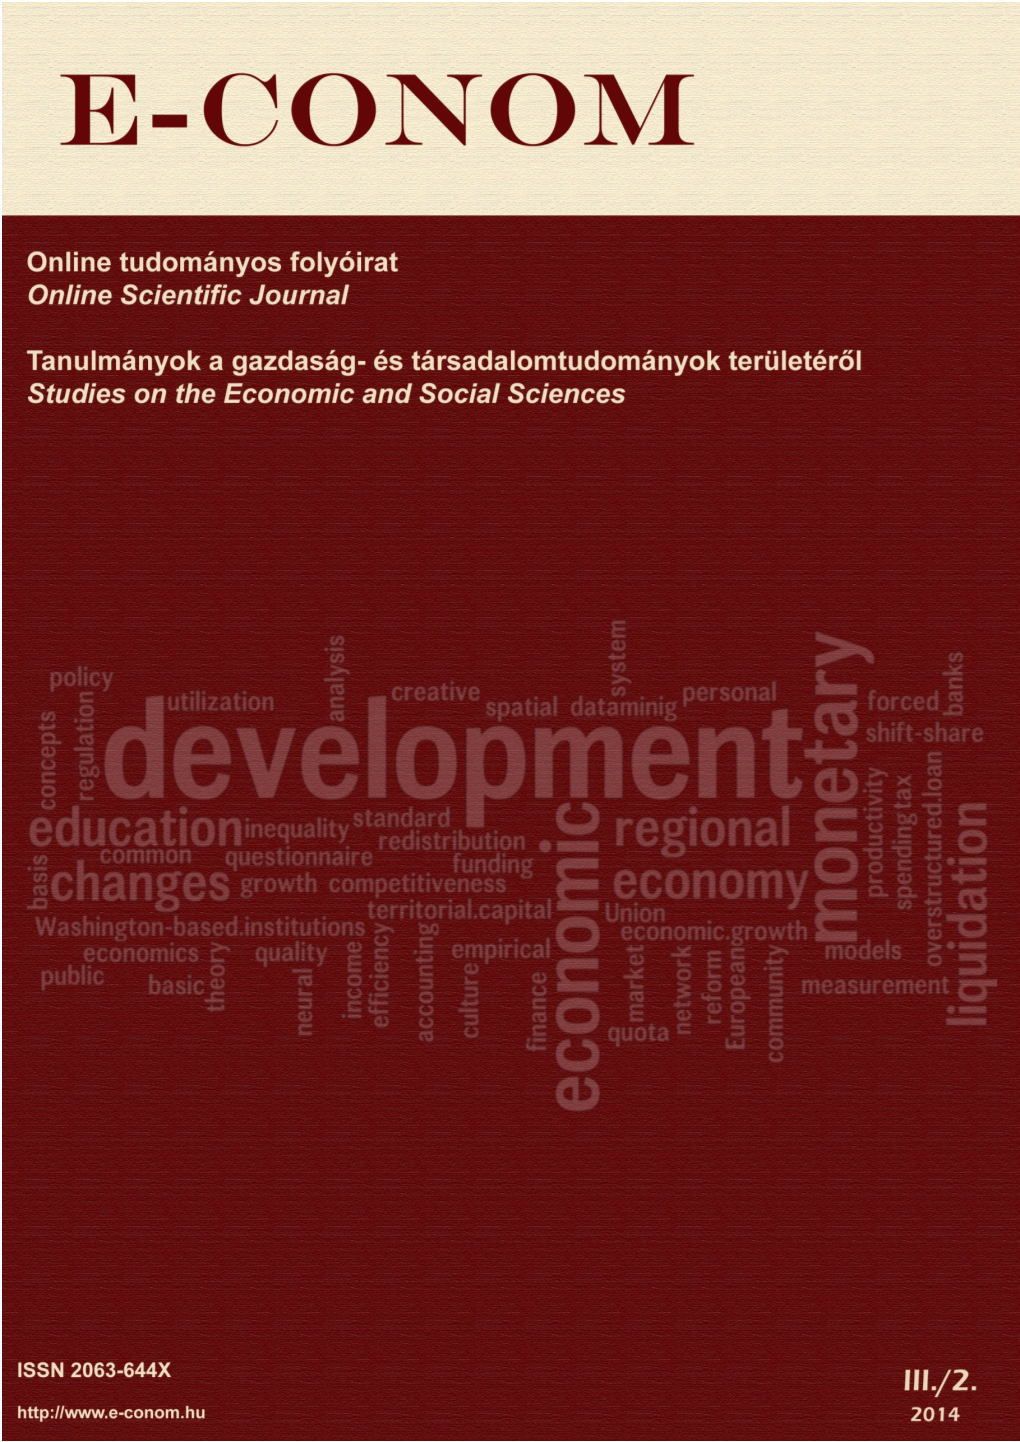 E-CONOM Online Tudományos Folyóirat I Online Scientific Journal